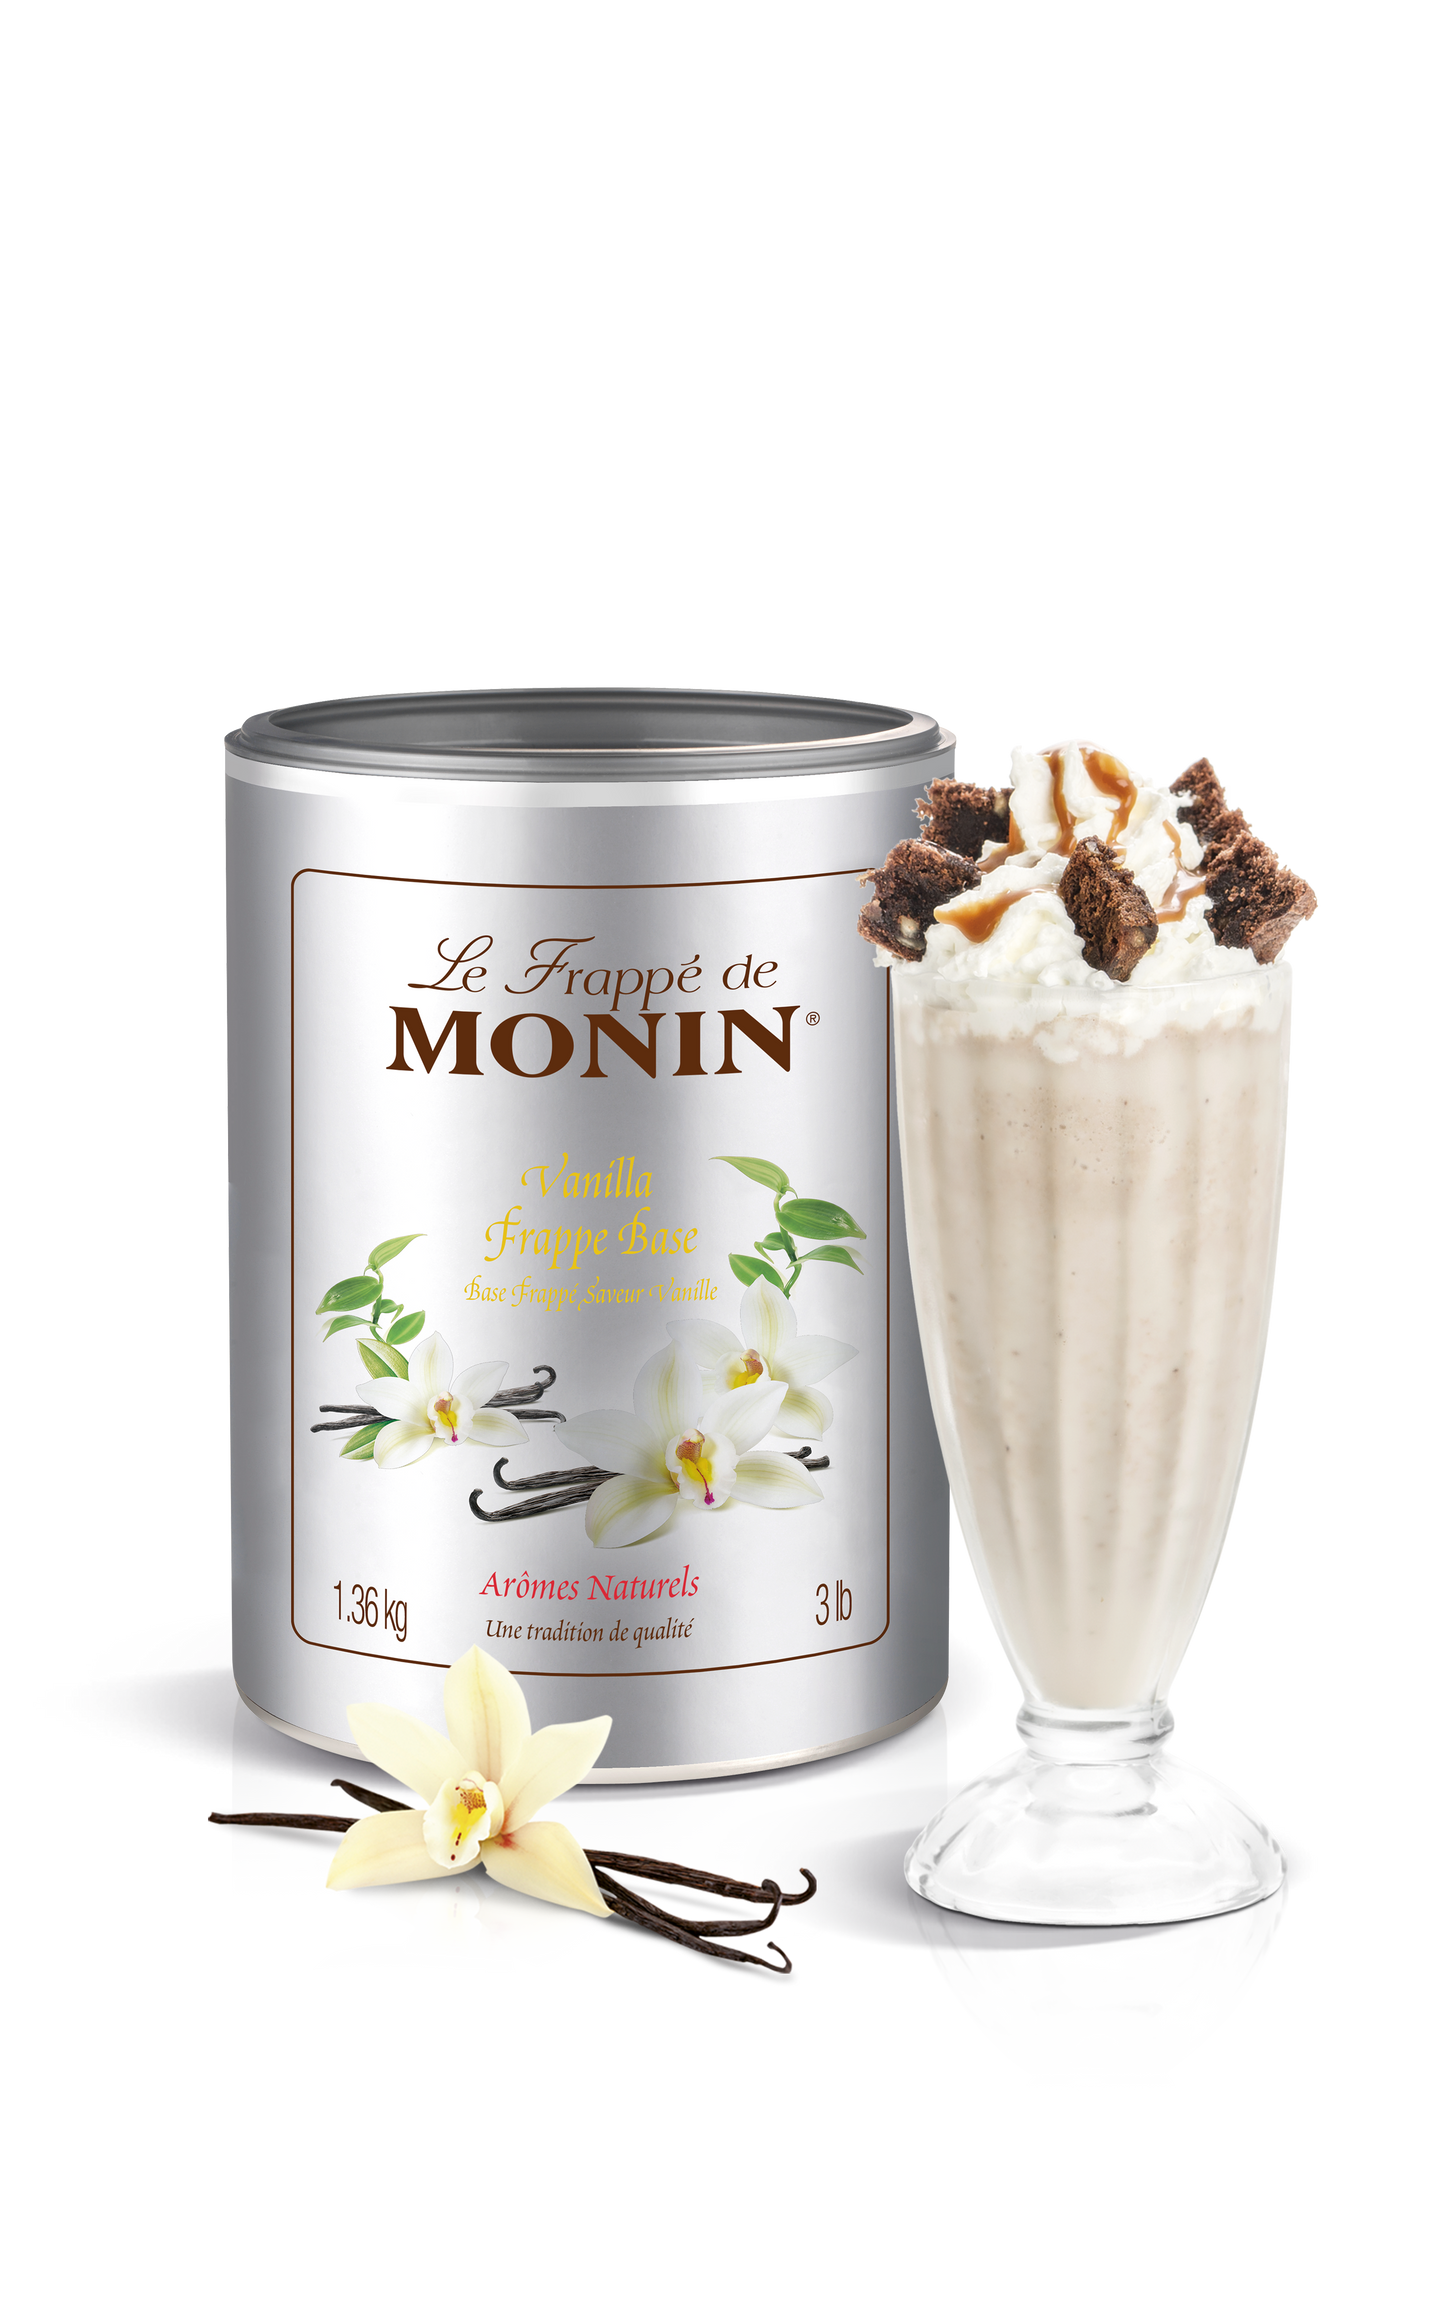 MONIN Vanilla Frappe Mix 1.36kg